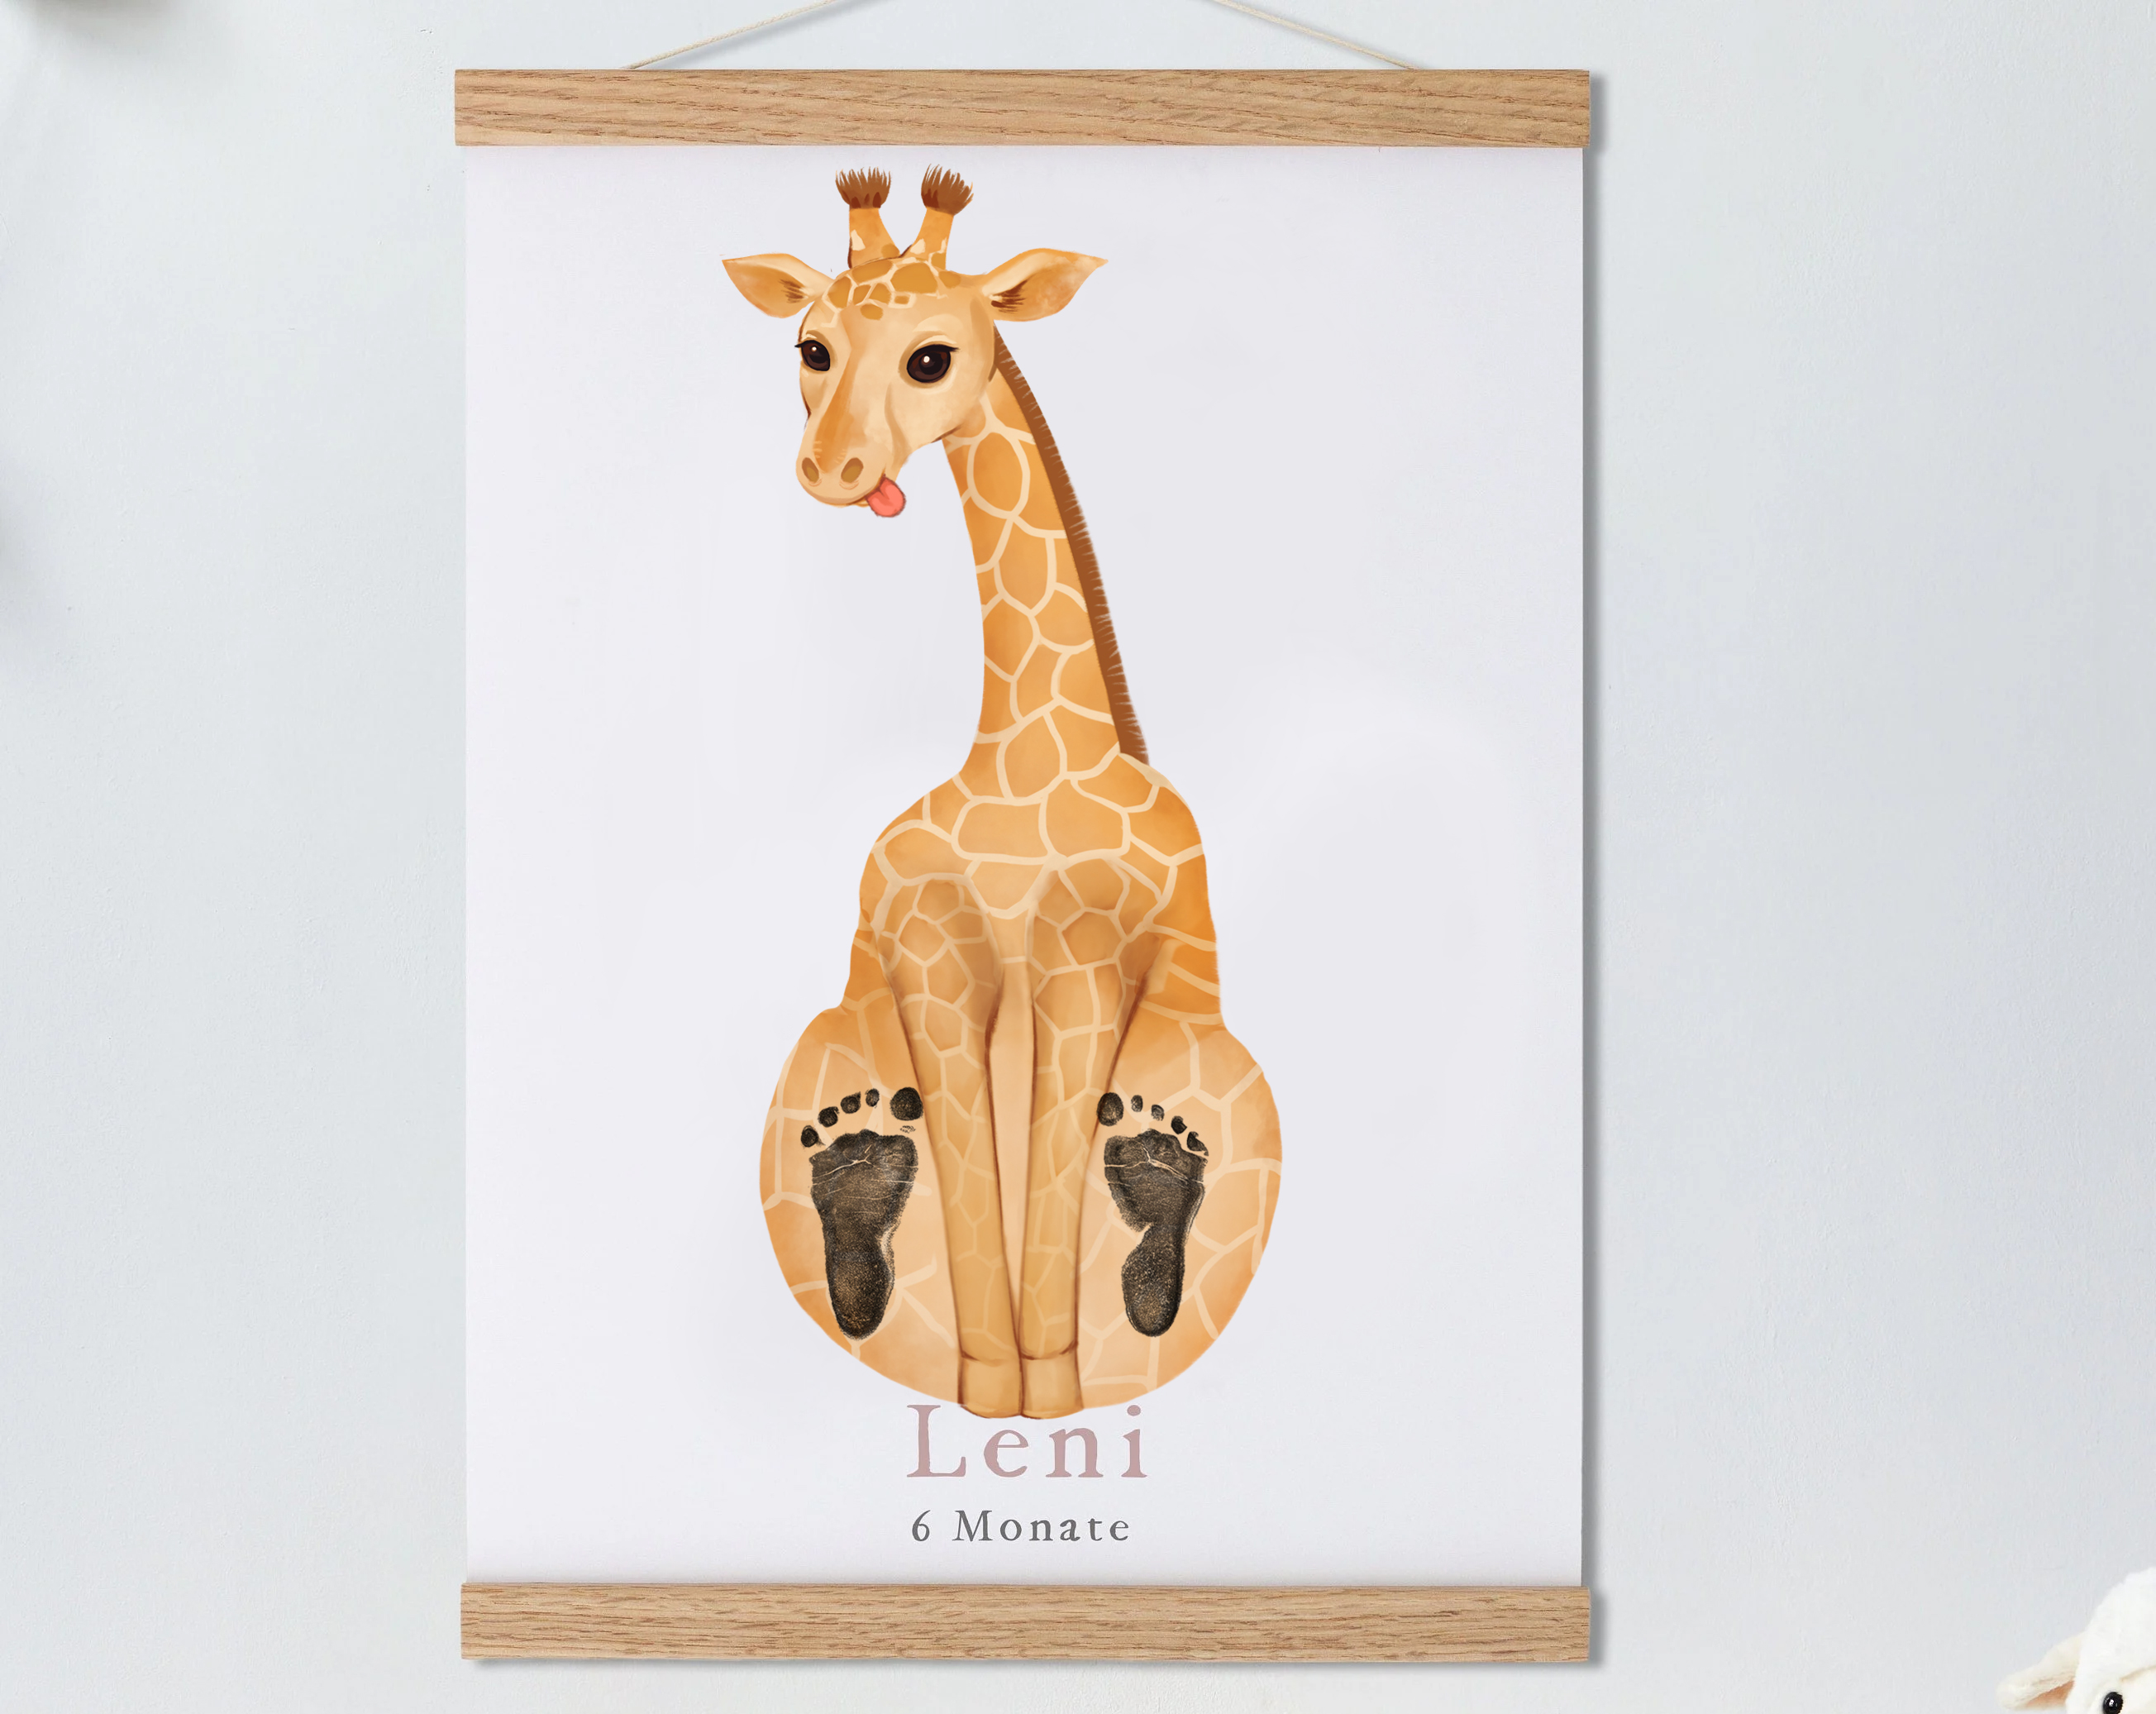 Cute Giraffe,Baby Gift and Pets Gift Personalized,, Footprint Set, Mural Baby & Children's Room Animals, Cute Giraffe🐾